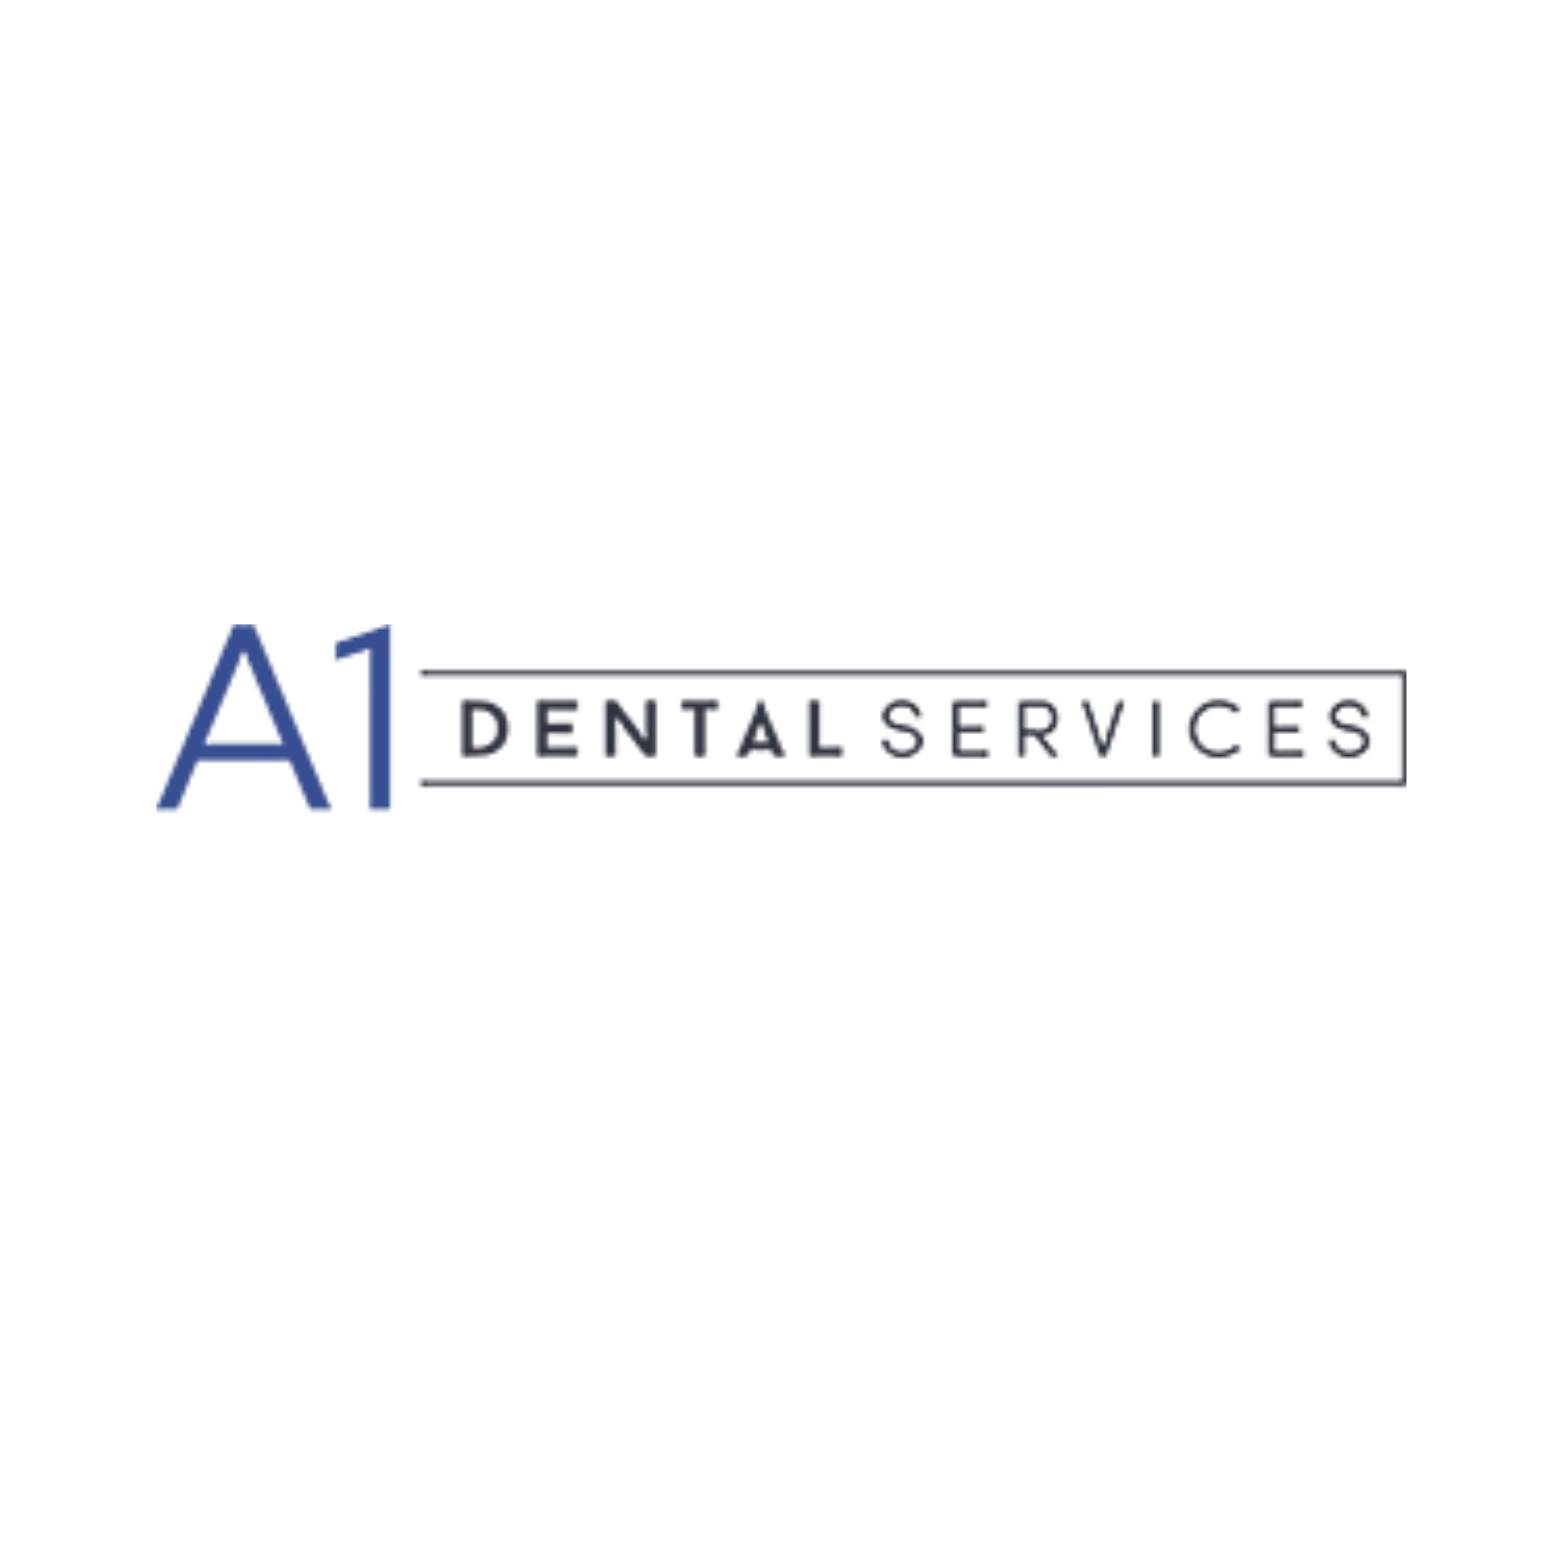 A1 Dental Services